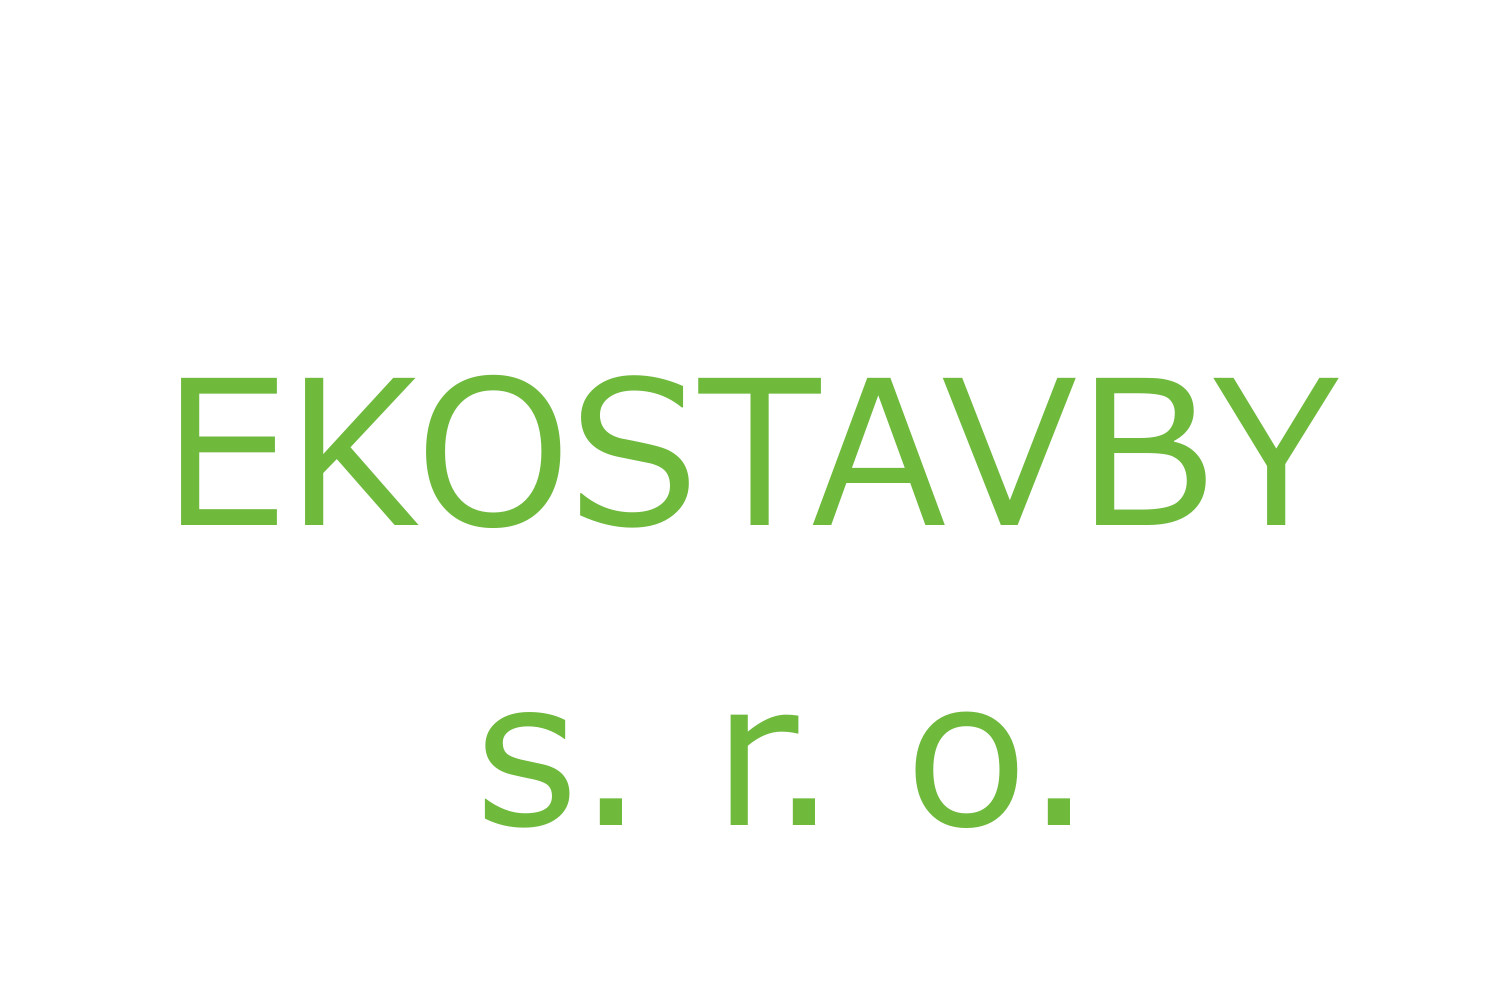 EKOSTAVBY, s.r.o., Nitra